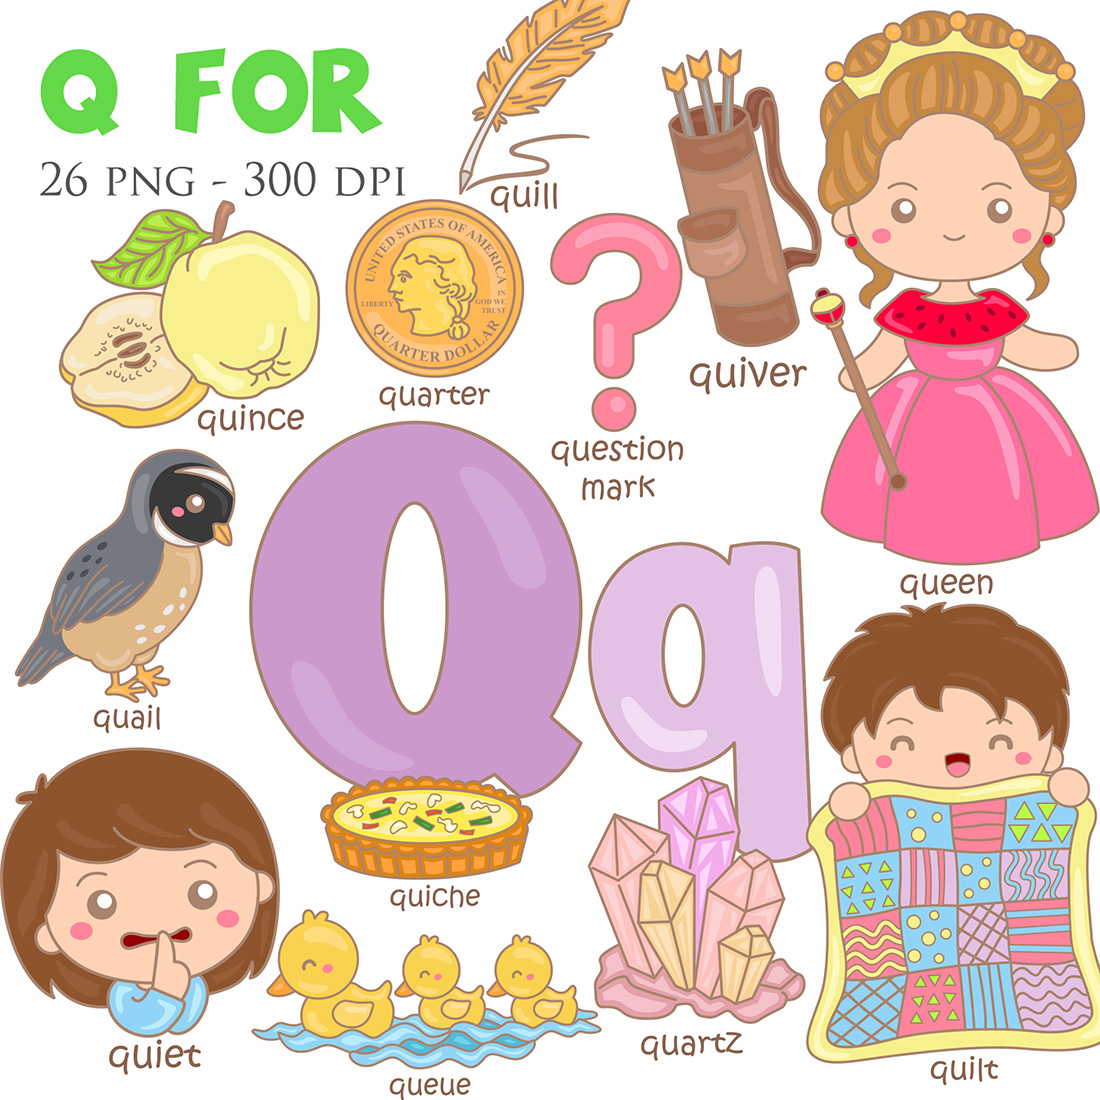 Alphabet Q For Vocabulary School Lesson Queen Quail Quit Queque Quartz Quit Quinche Quill Quarter Question MarkIllustration Vector Clipart Cartoon cover image.